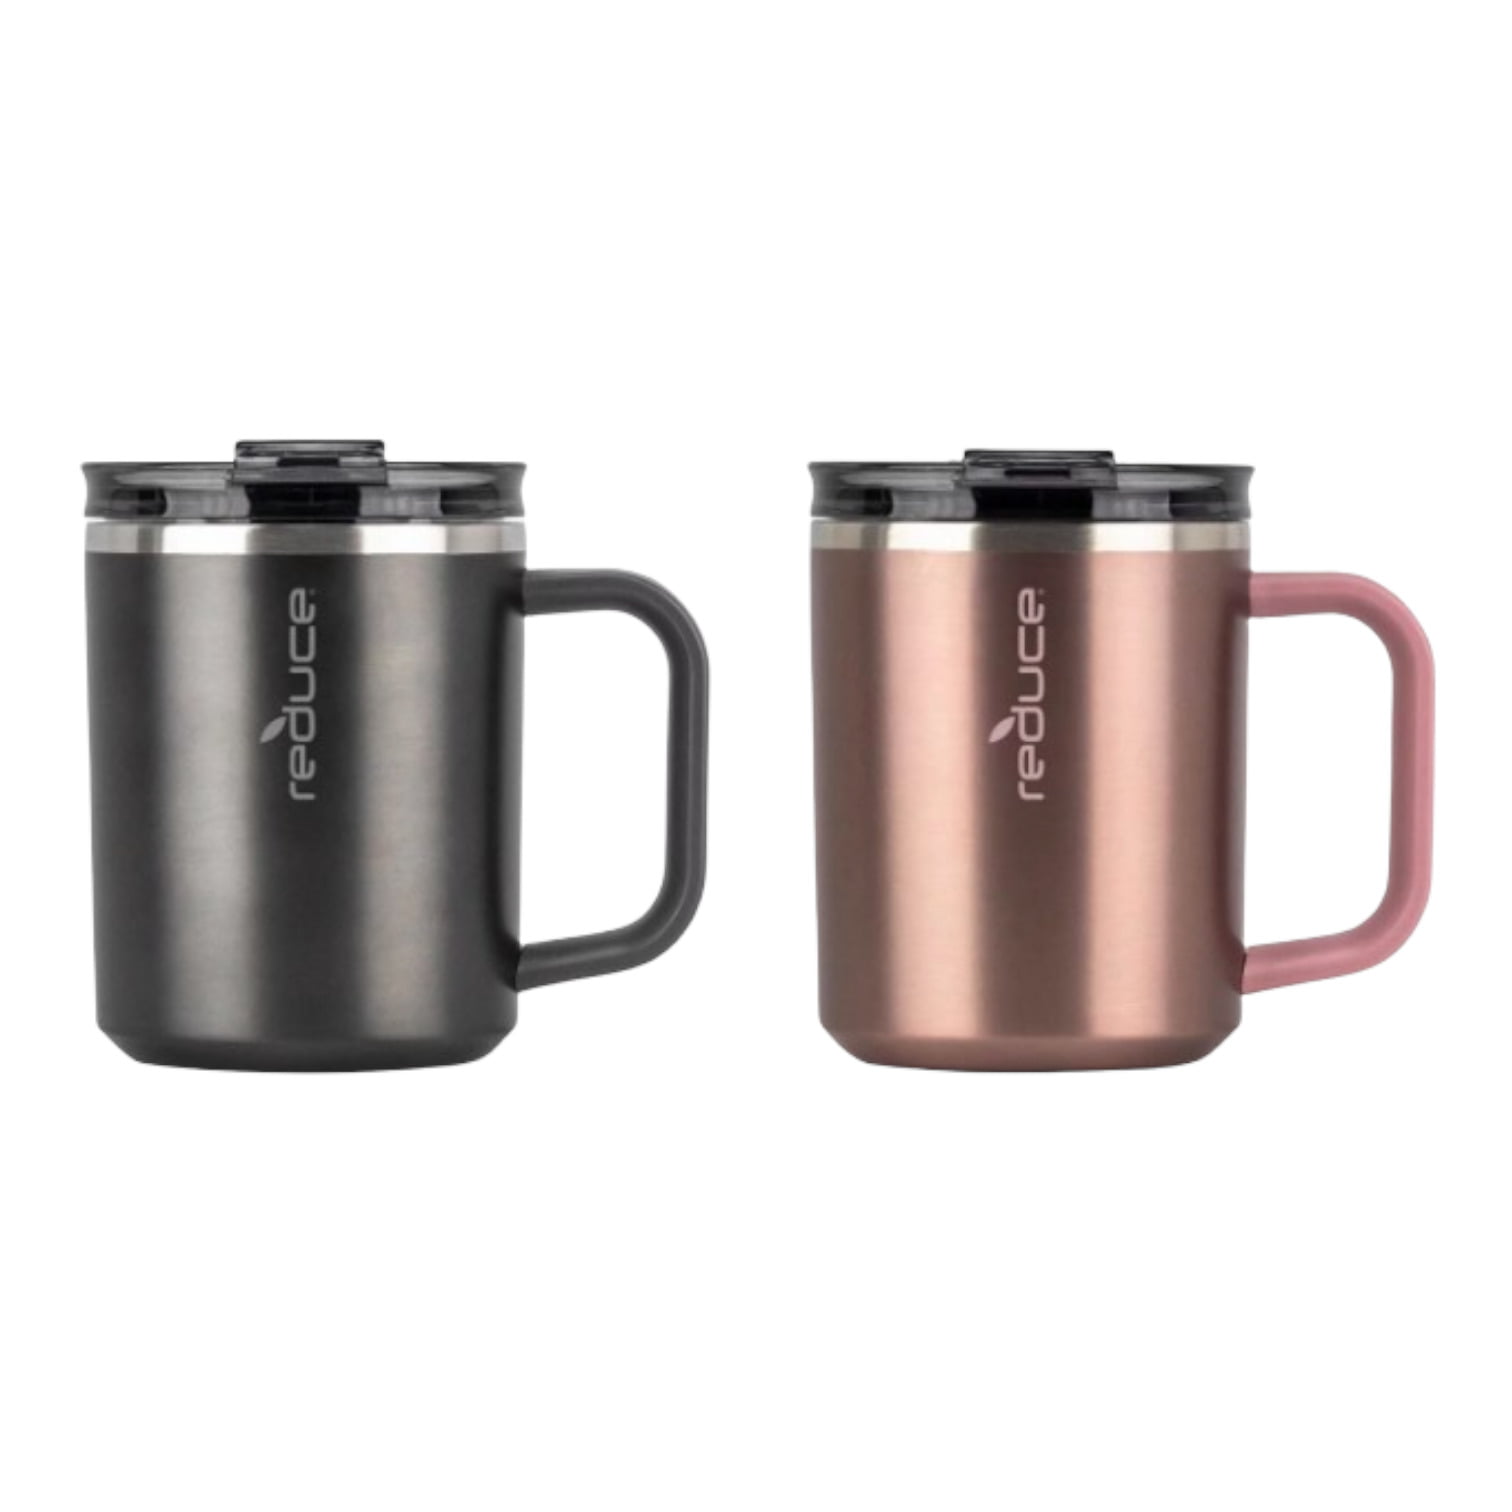 Kahlua Coffee Mug Cup Set of 2 Std Size - Bonus Travel Mug - Hot Coffee  Drink